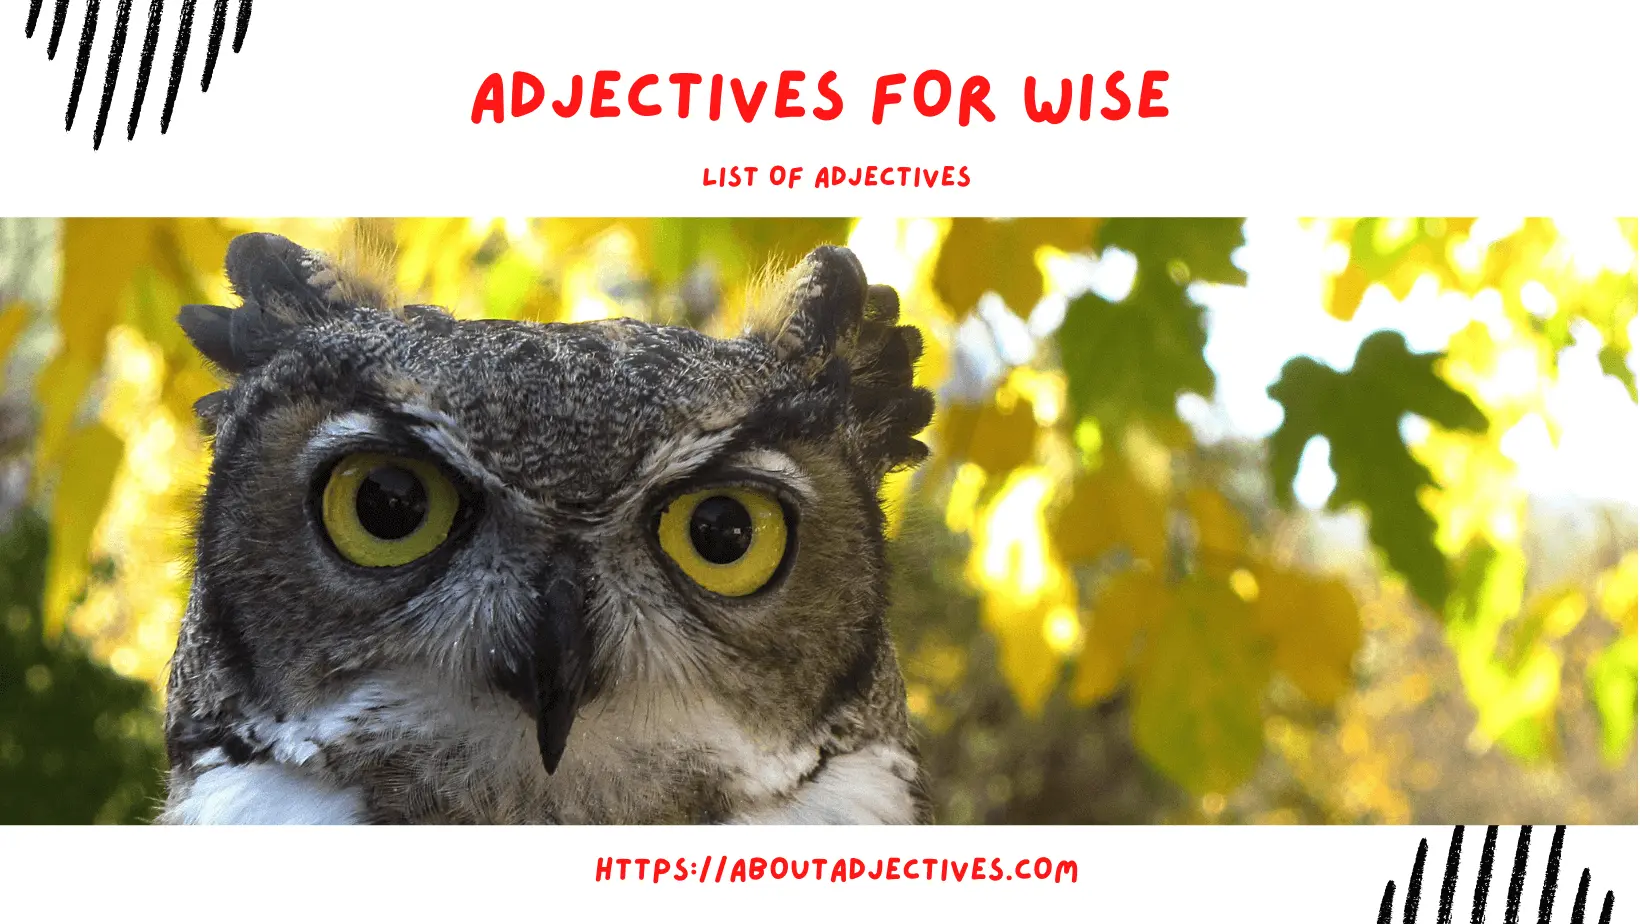 Adjectives for wisdom